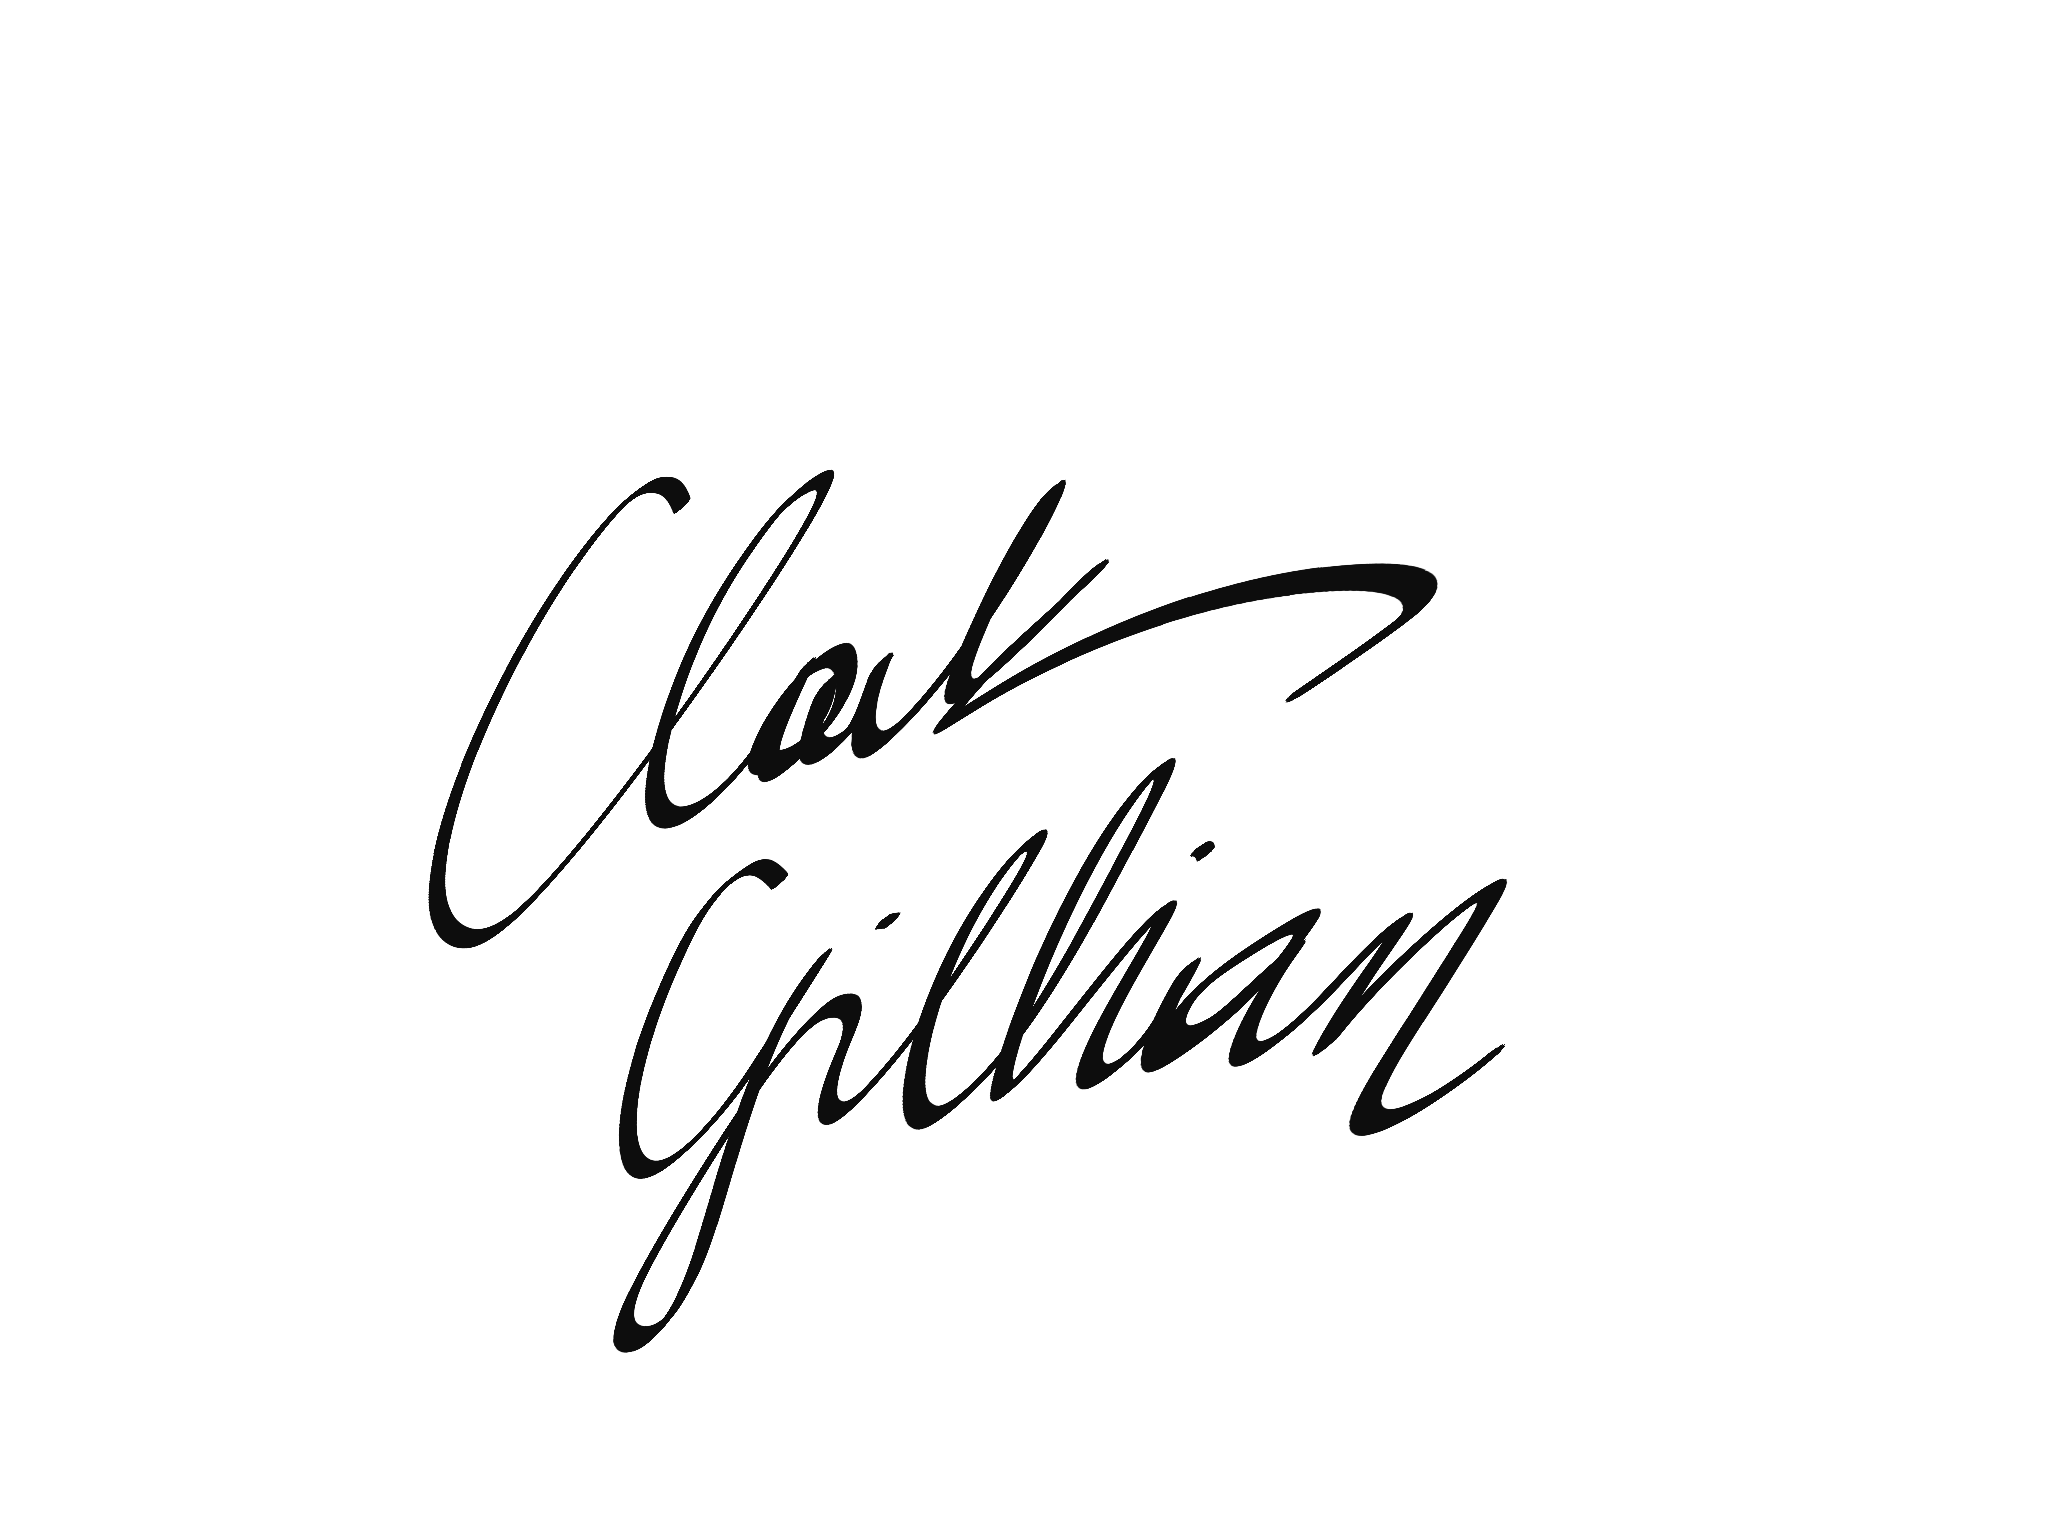 Clark Gillian Website